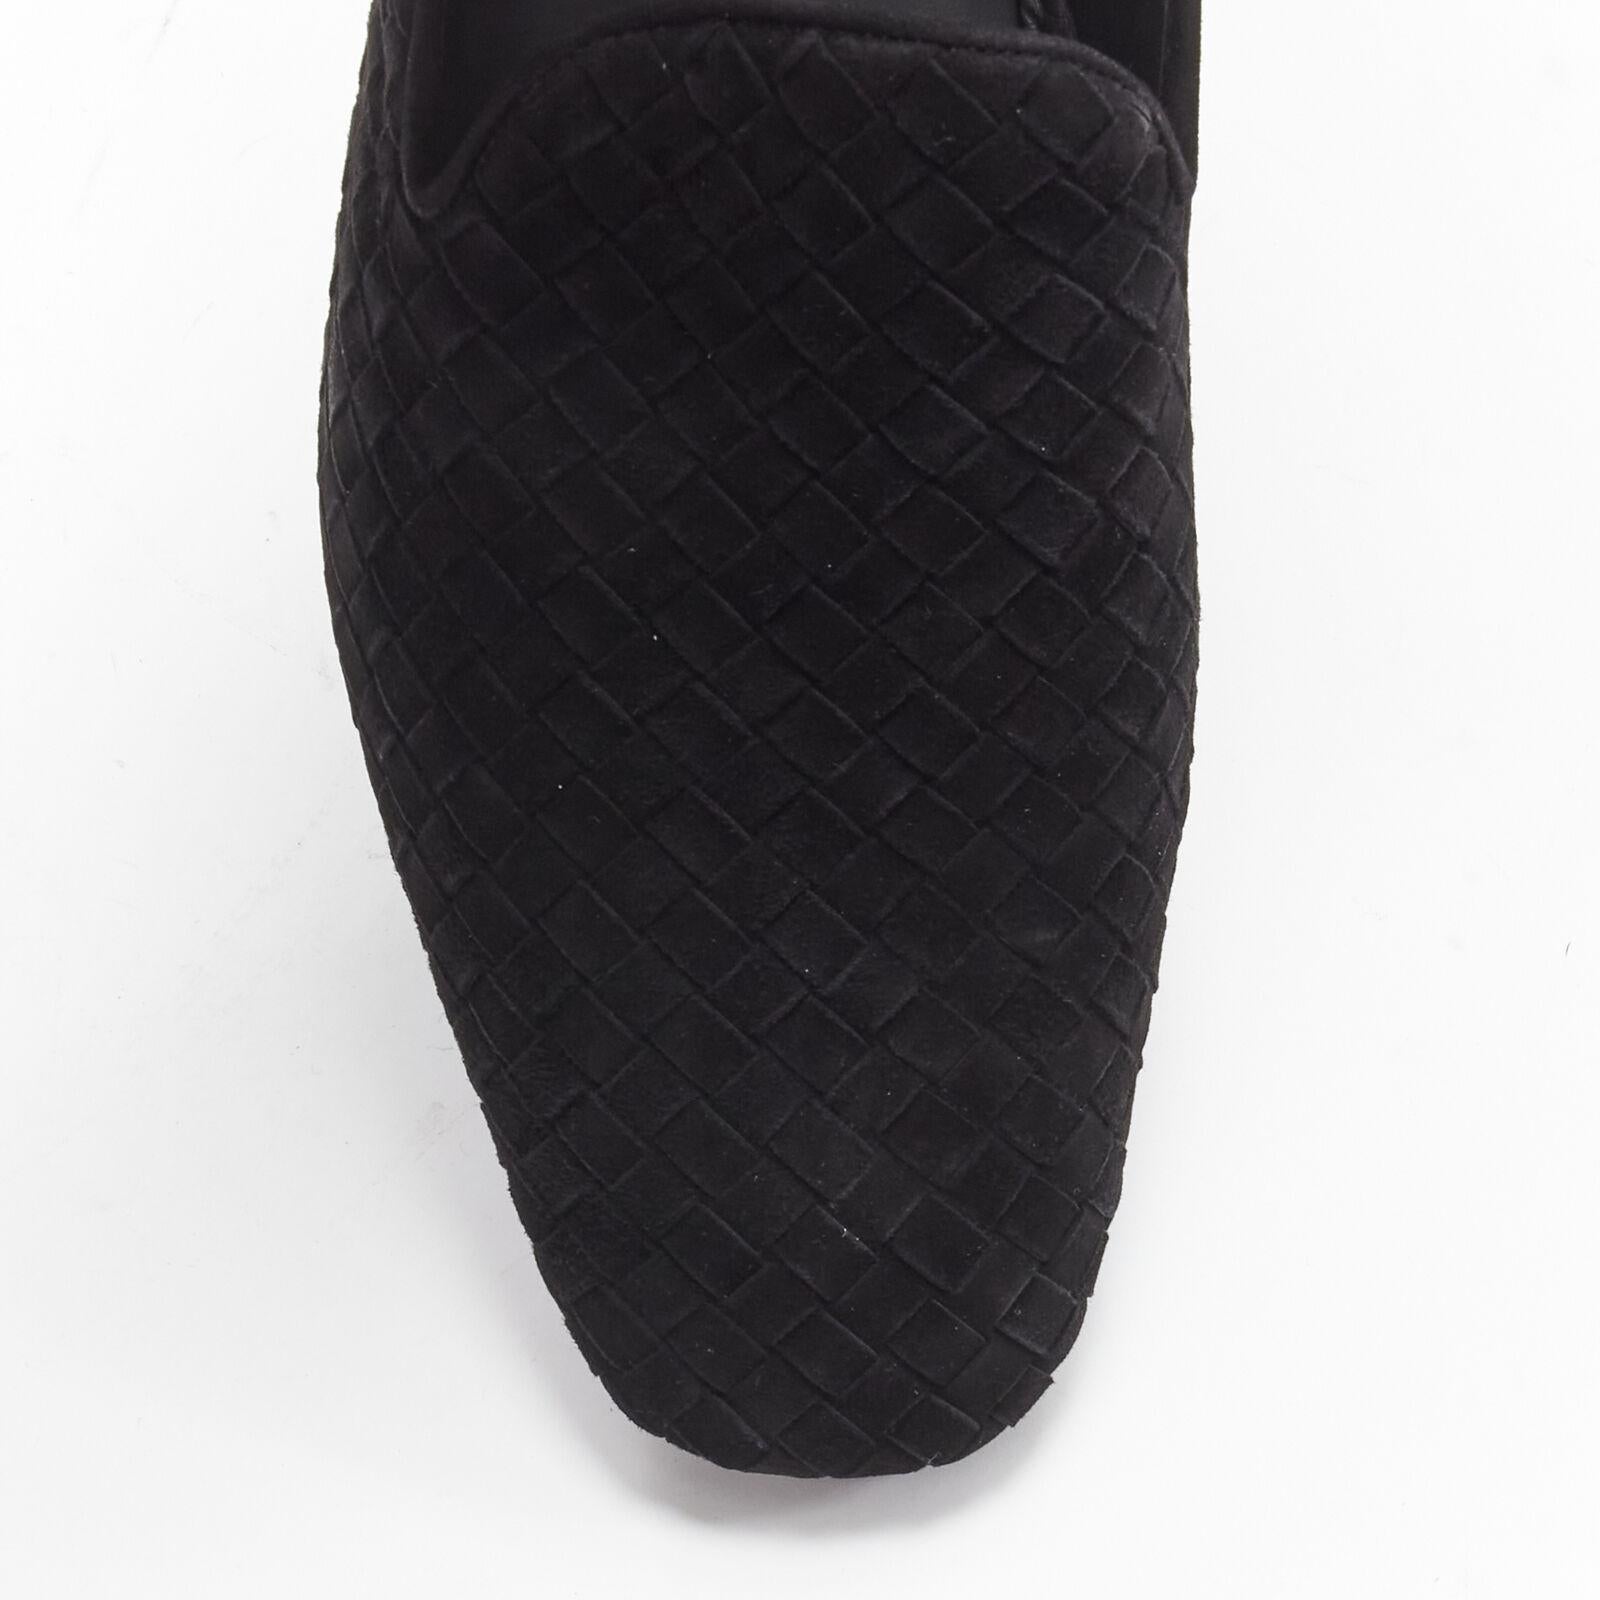 new BOTTEGA VENETA Intrecciato Luxe suede black woven dress loafer shoes EU42.5 1